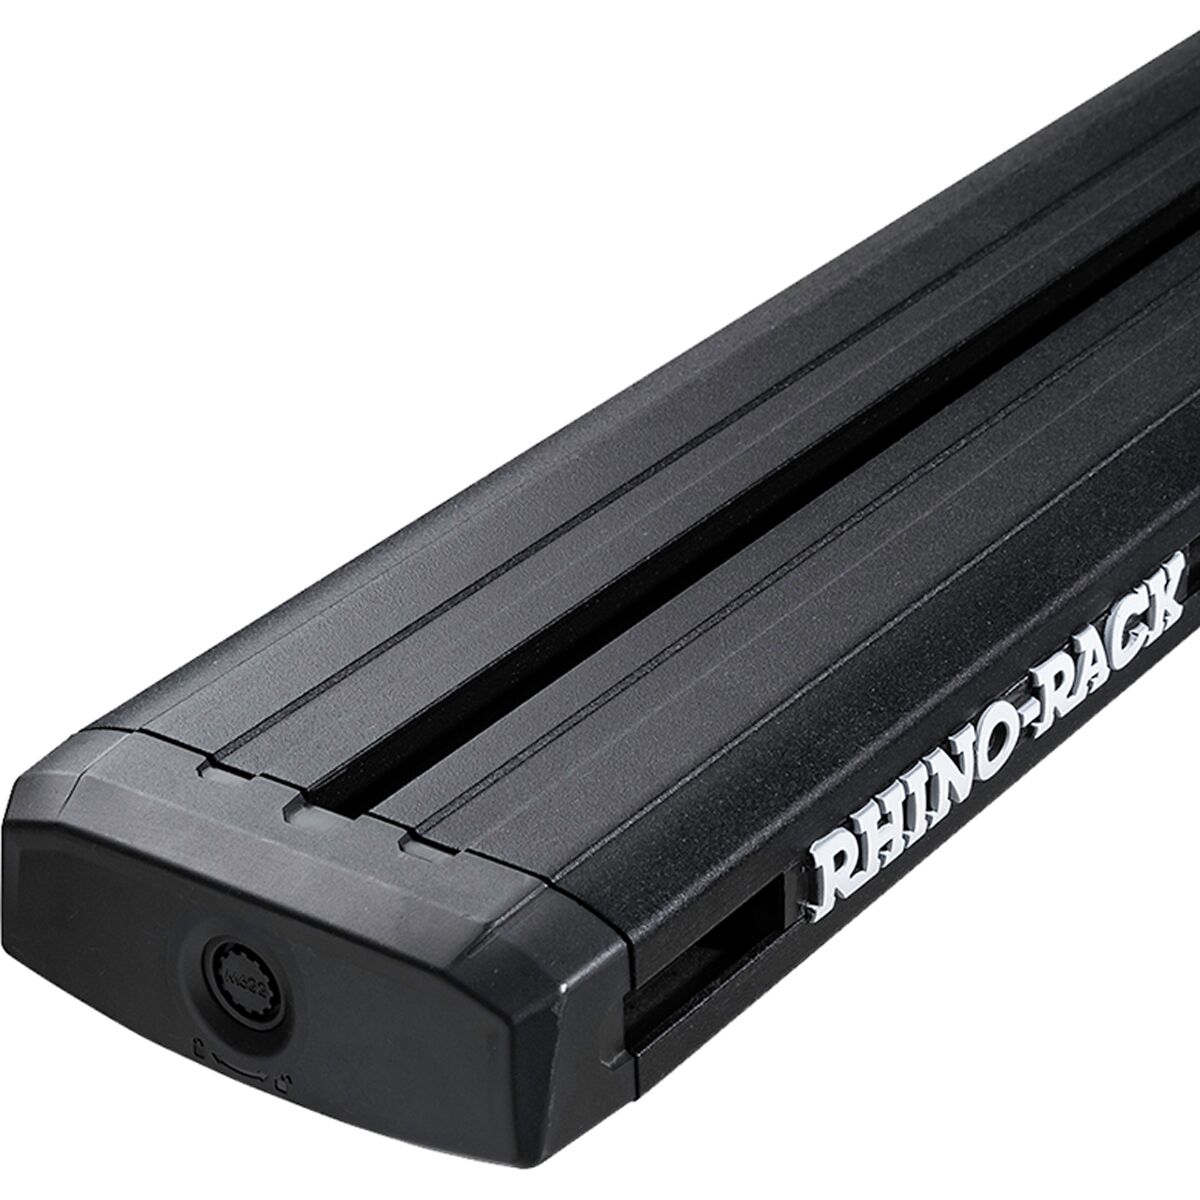 Rhino-Rack 1500mm Reconn-Deck Single Bar Kit